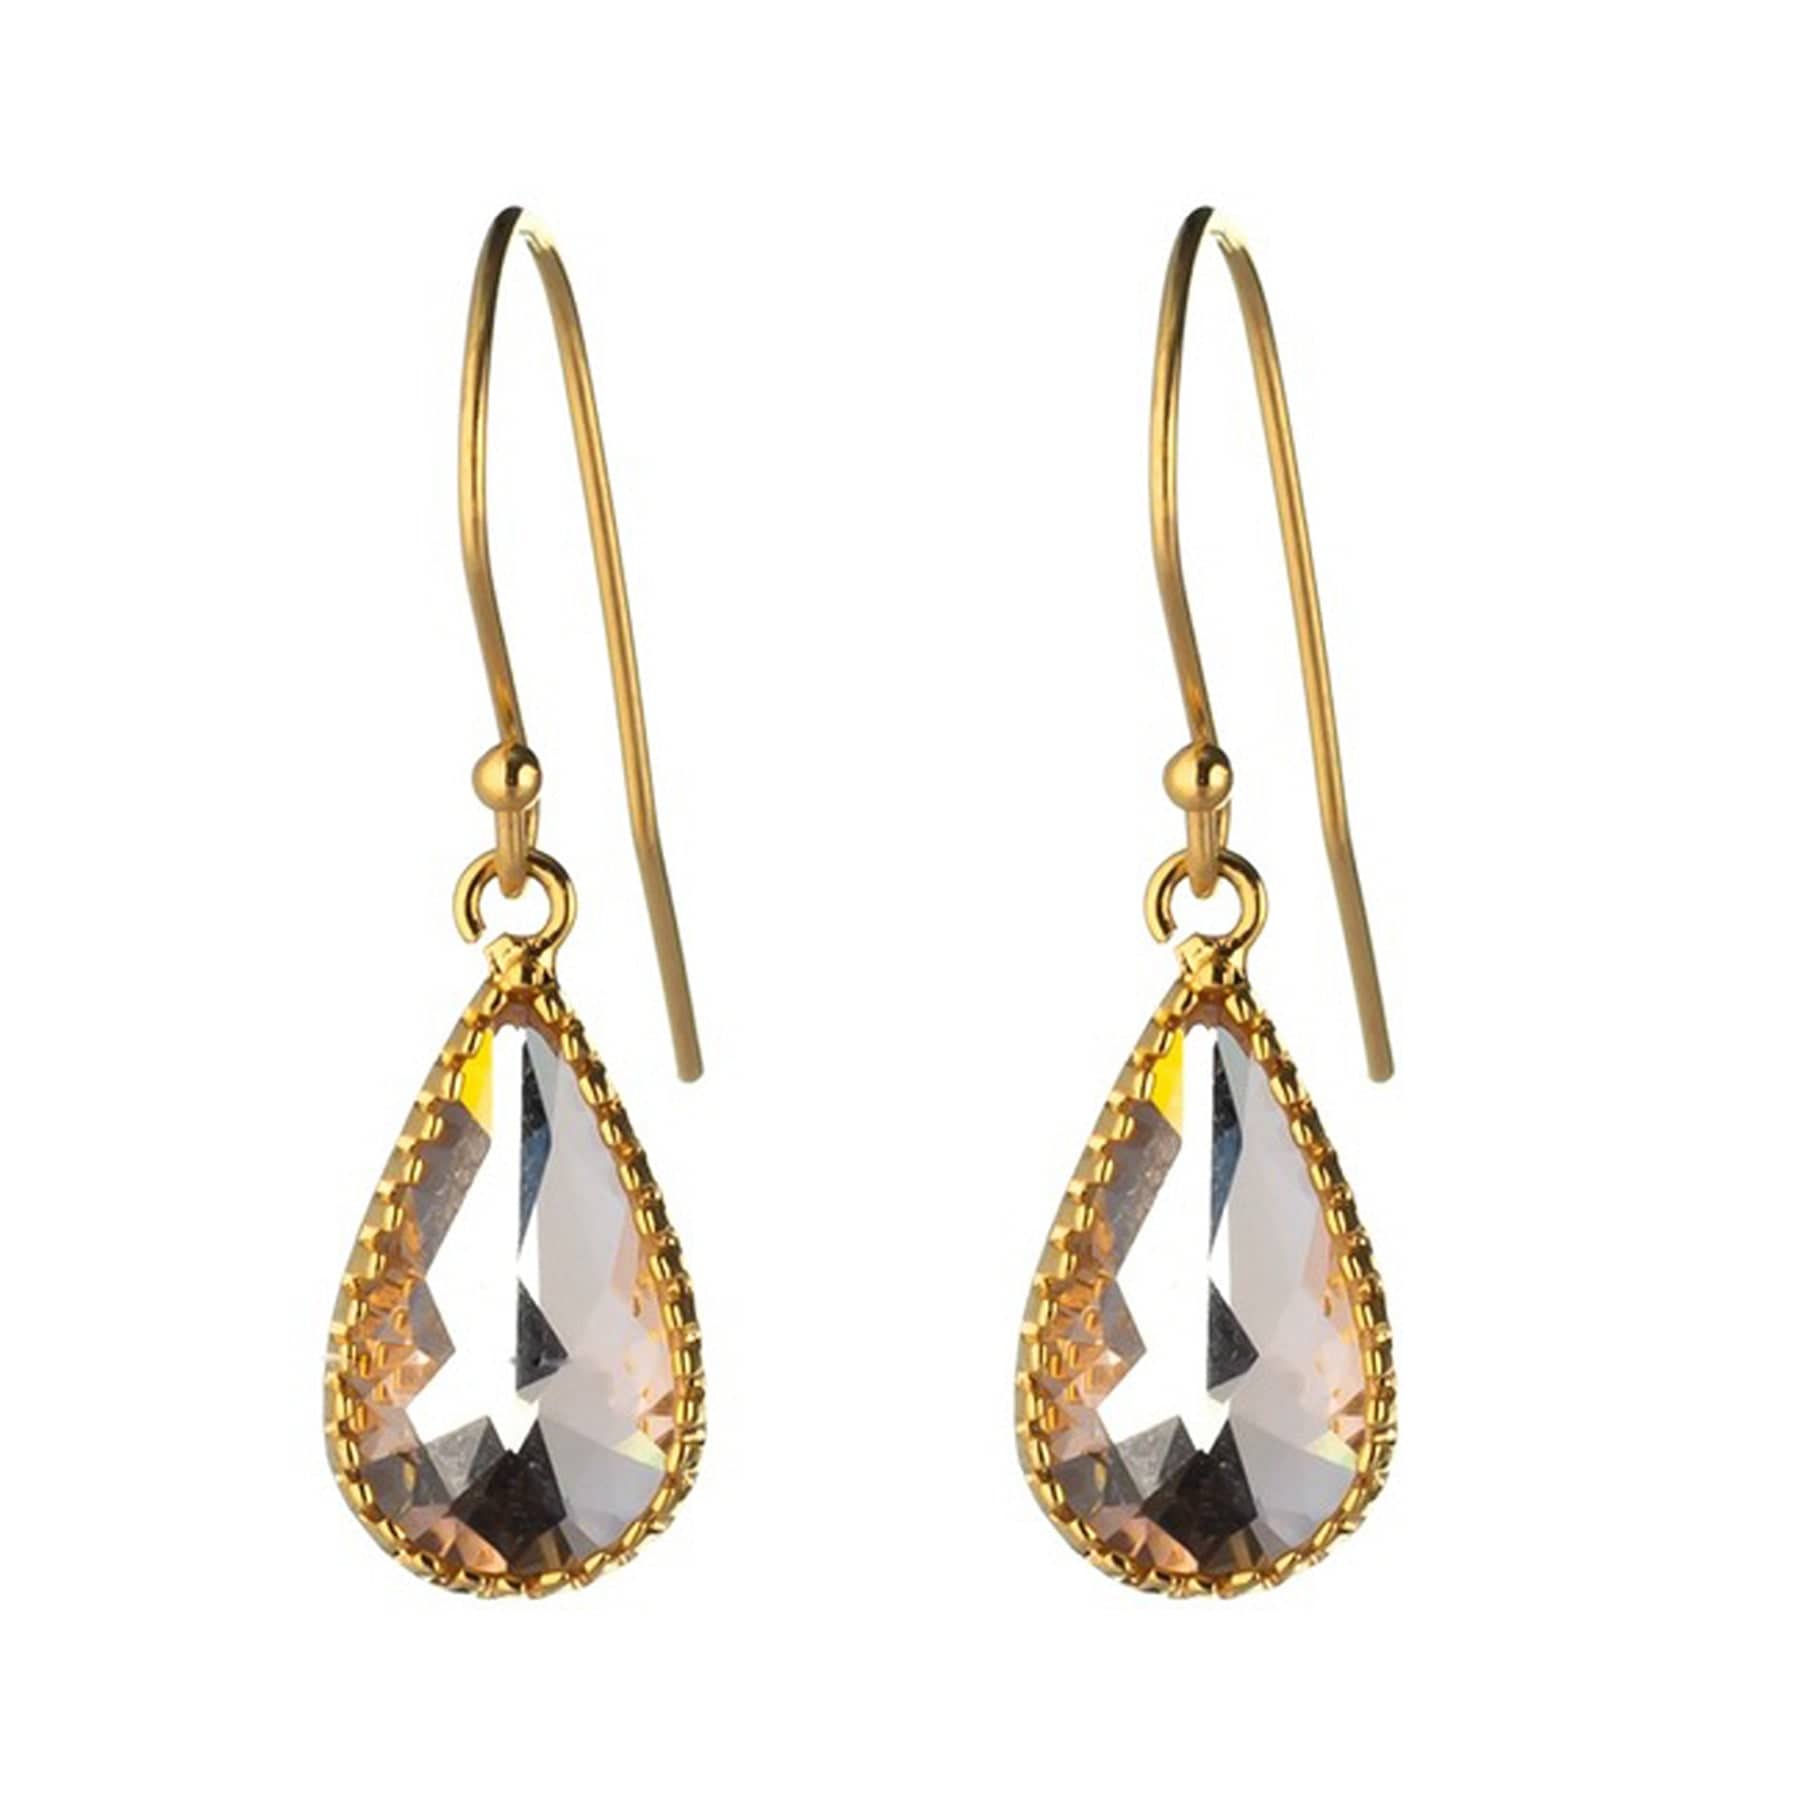 Blush glass earrings